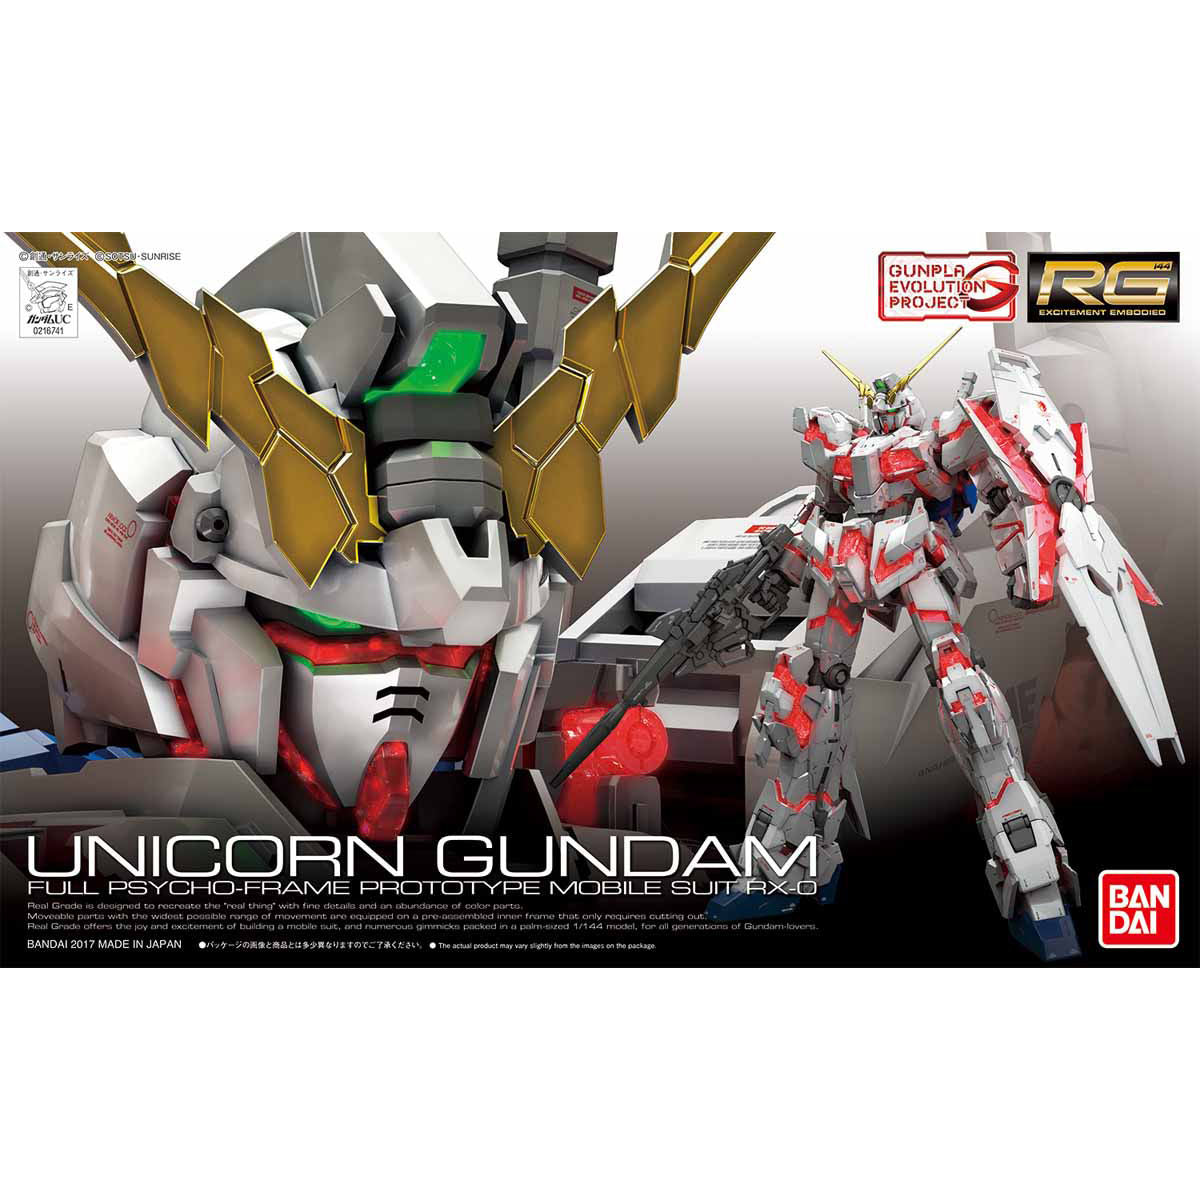 RG Perfectibility 1/144 Unicorn Gundam Real Grade Gundam Base Limited  Gunpla